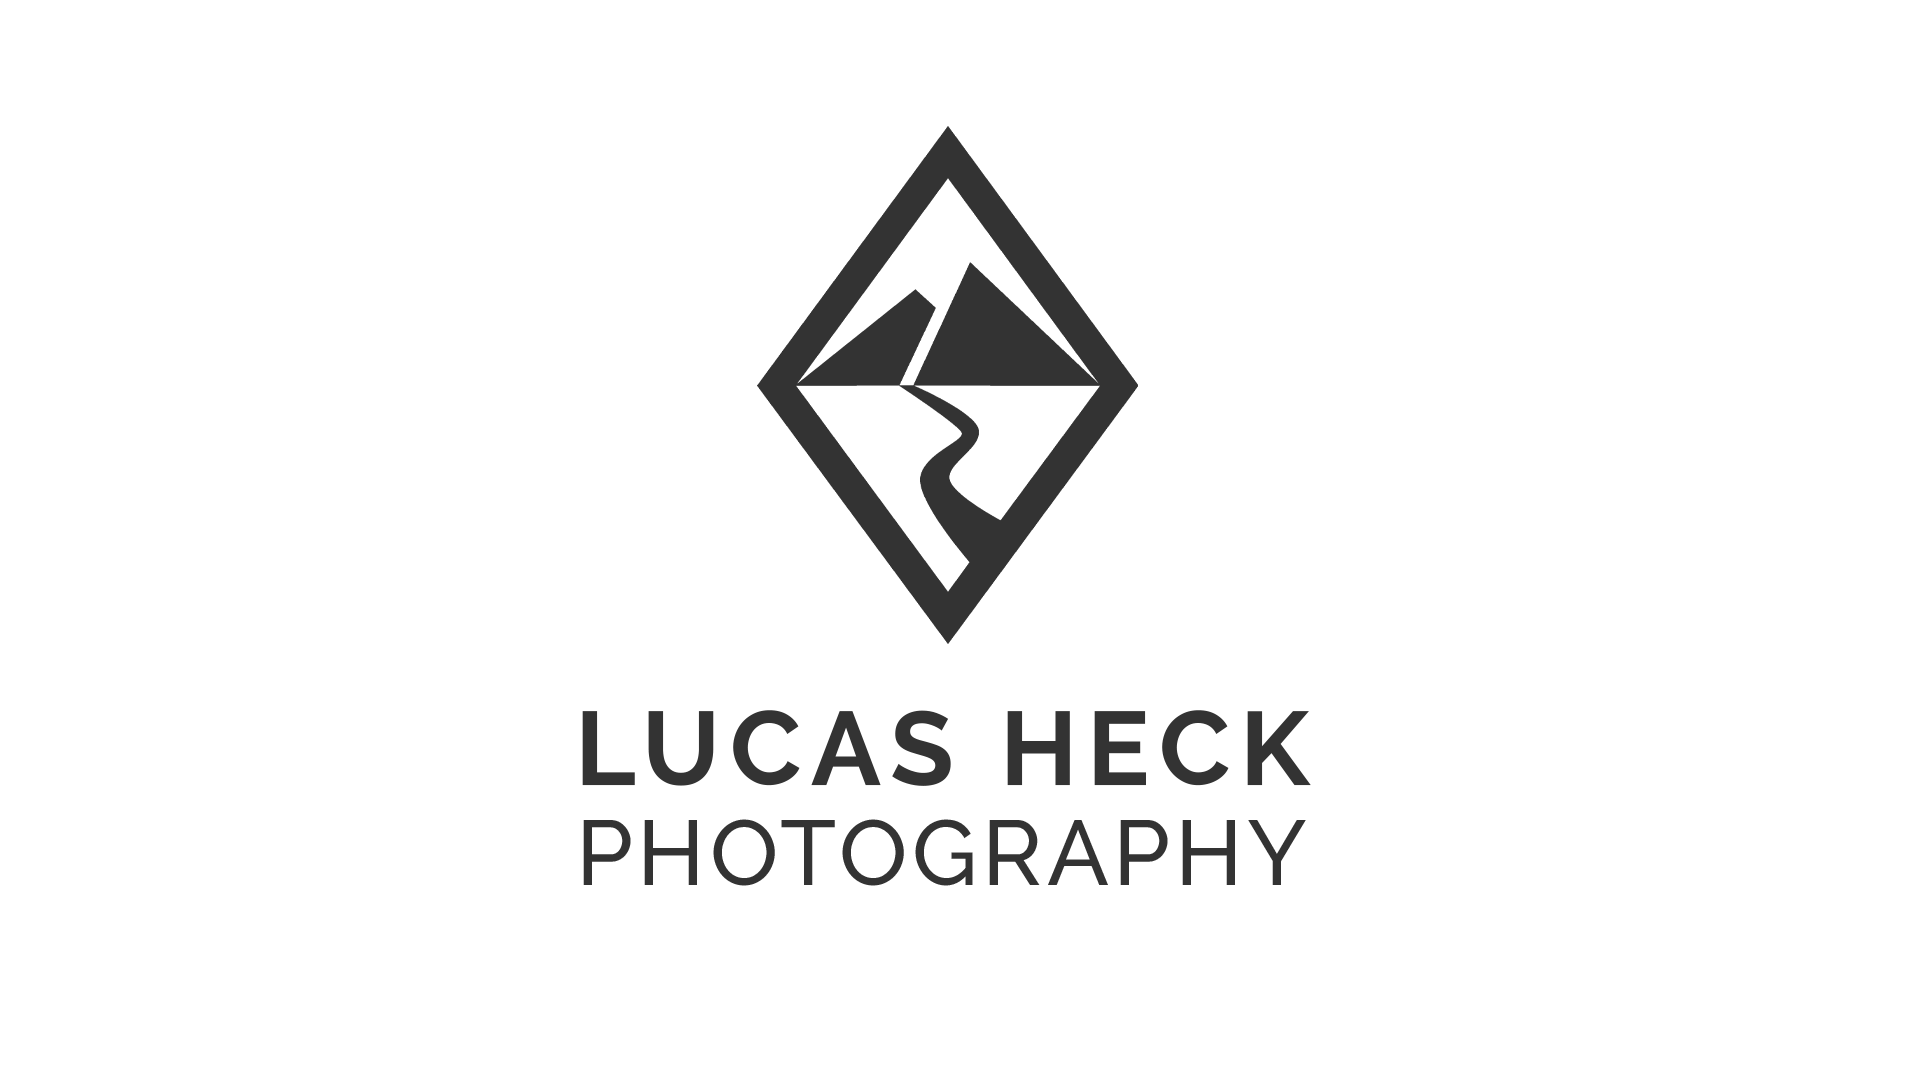 Lucas Heck